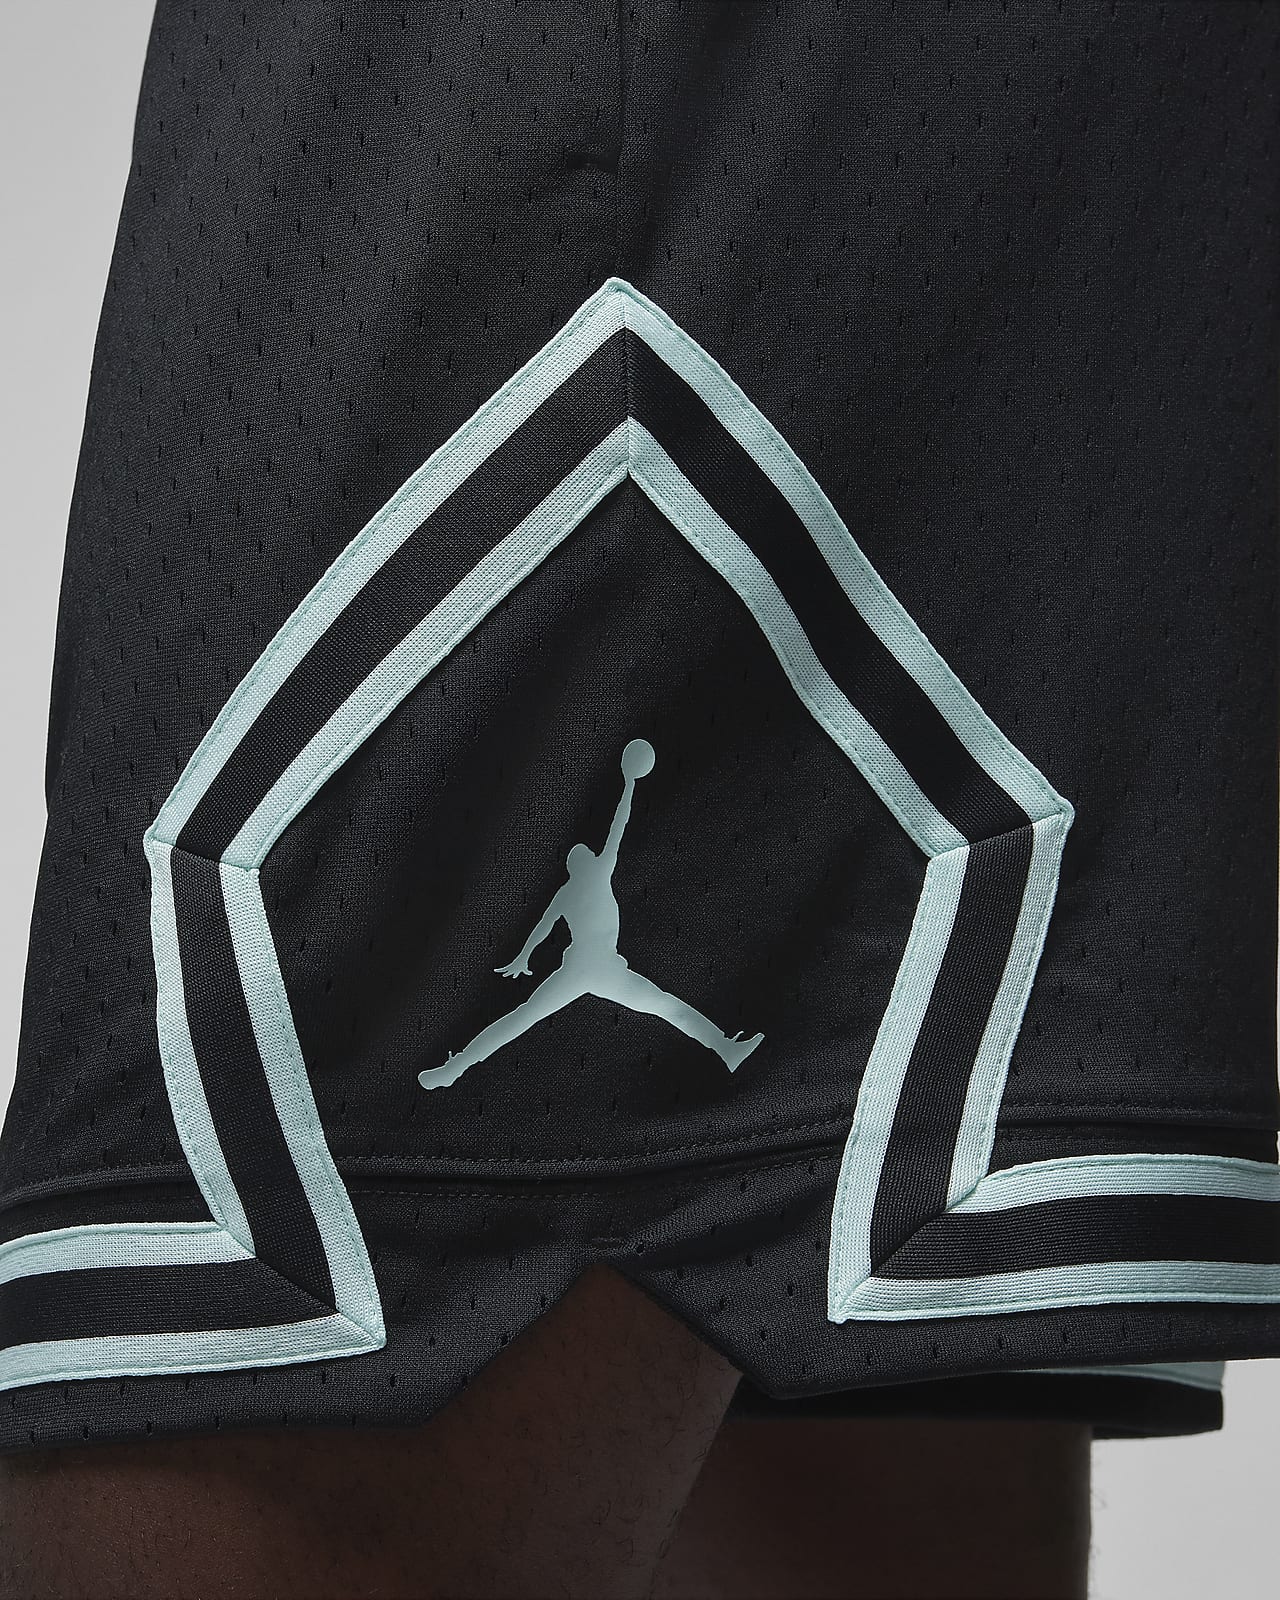 Nike Jordan Dri-FIT Diamond Shorts – buy now at Asphaltgold Online Store!